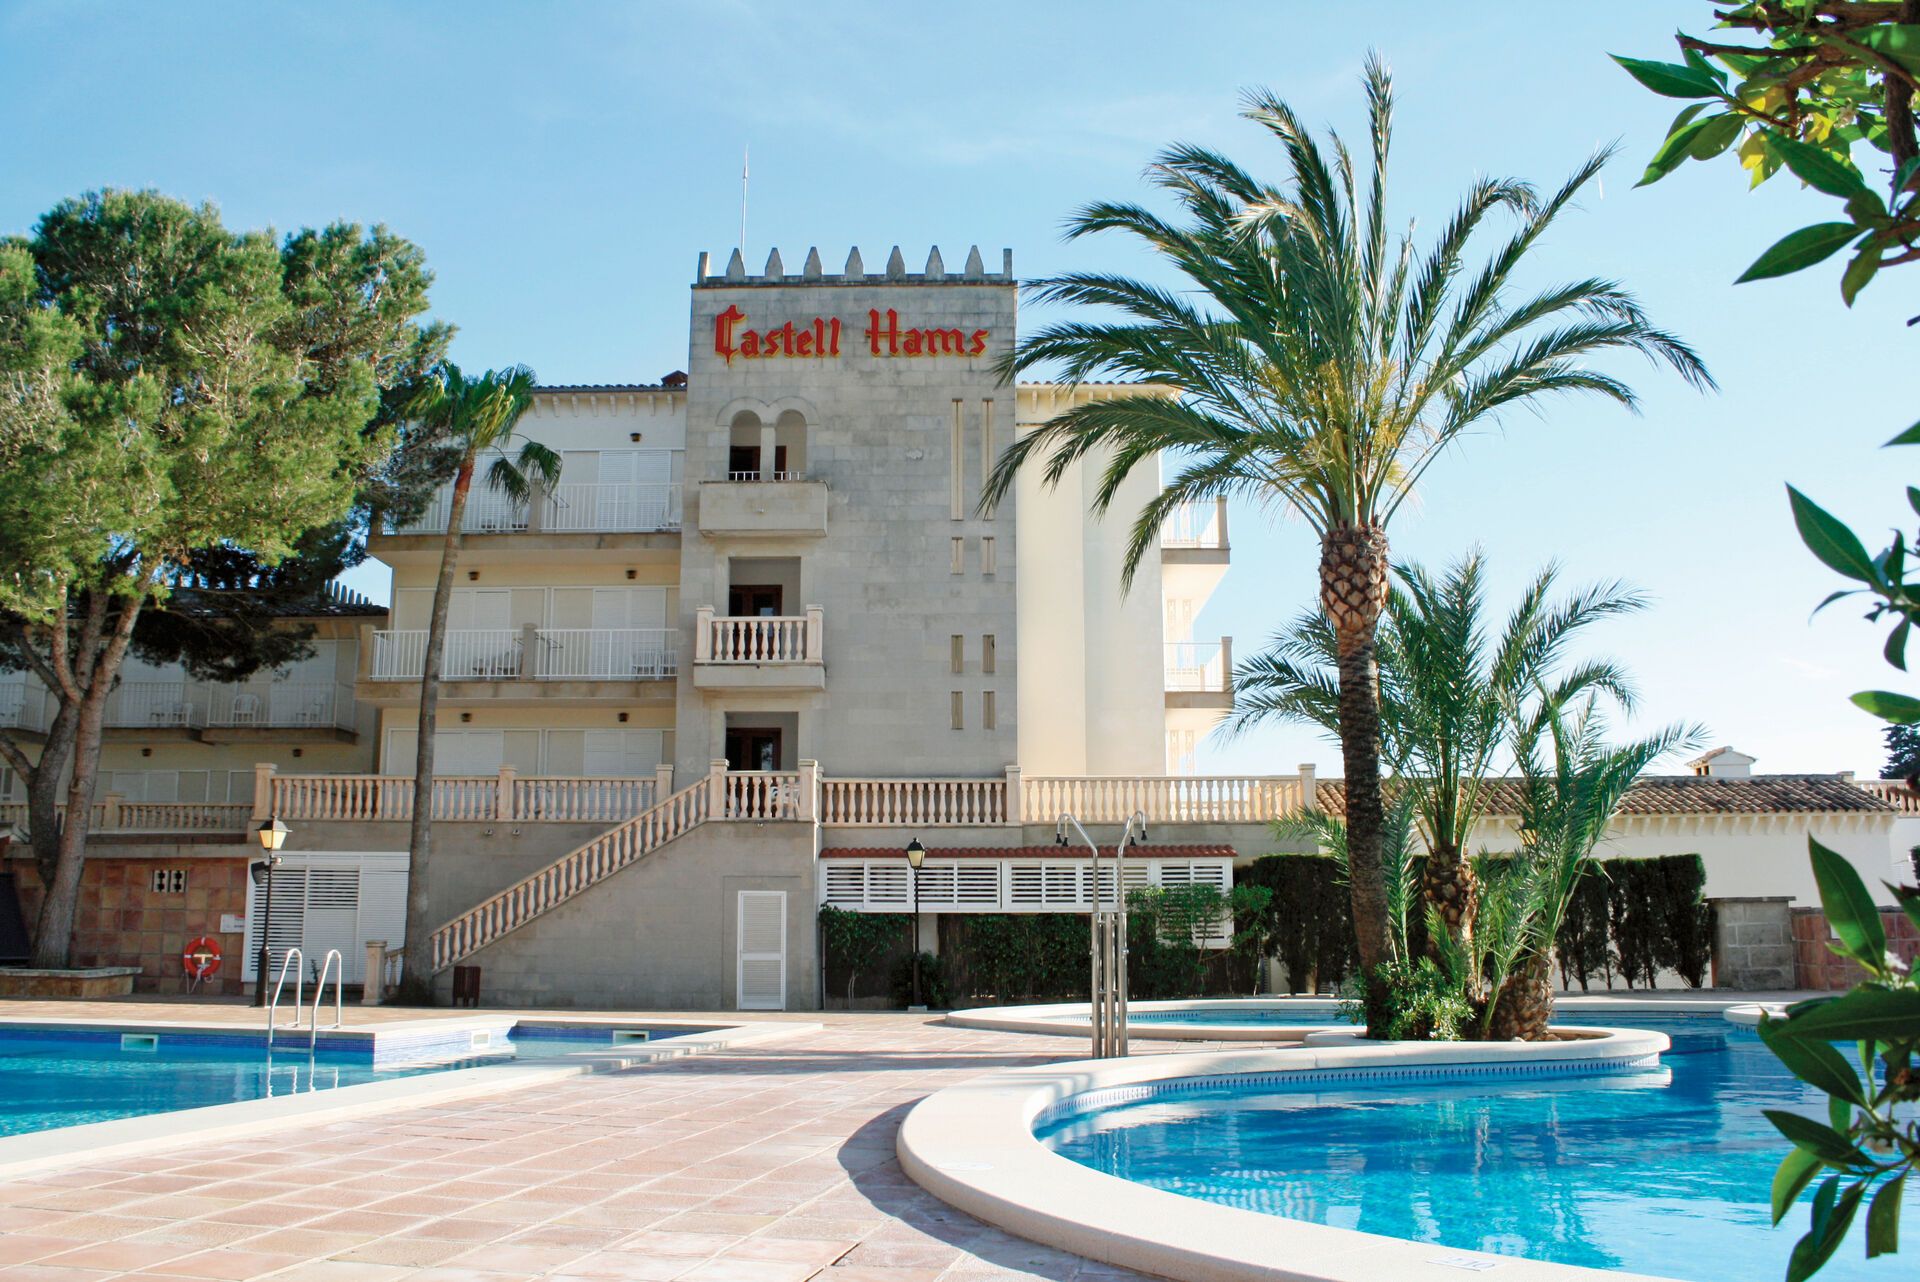 Baléares - Majorque - Espagne - Hôtel Club Castell dels Hams 4*